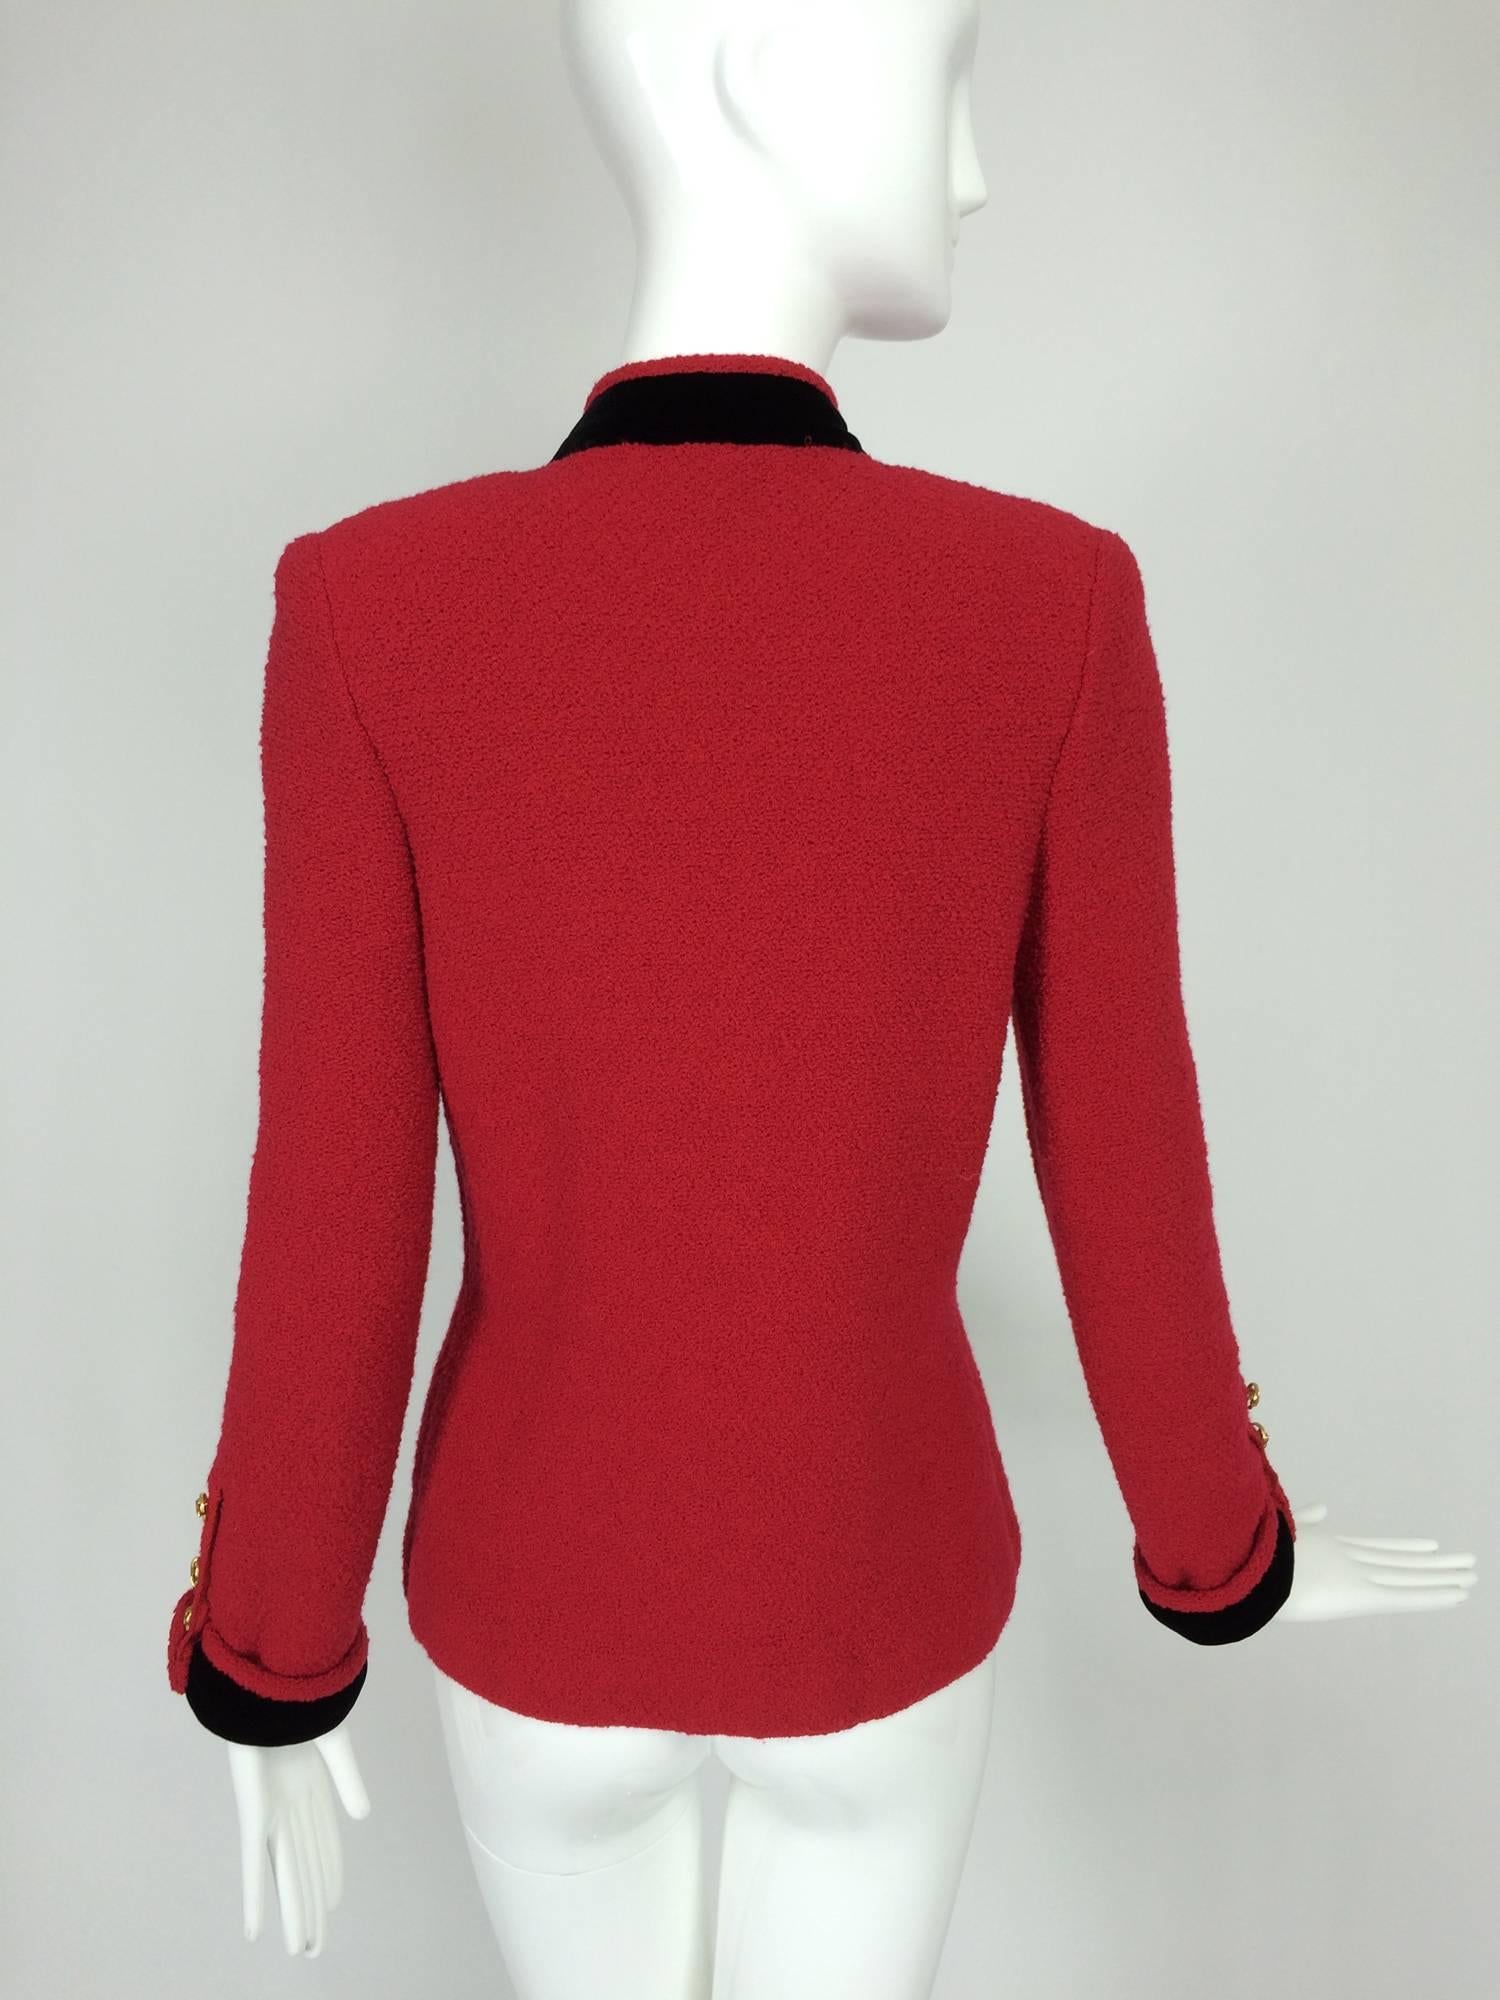 Women's Adolfo red boucle jacket with black velvet trims 1970s